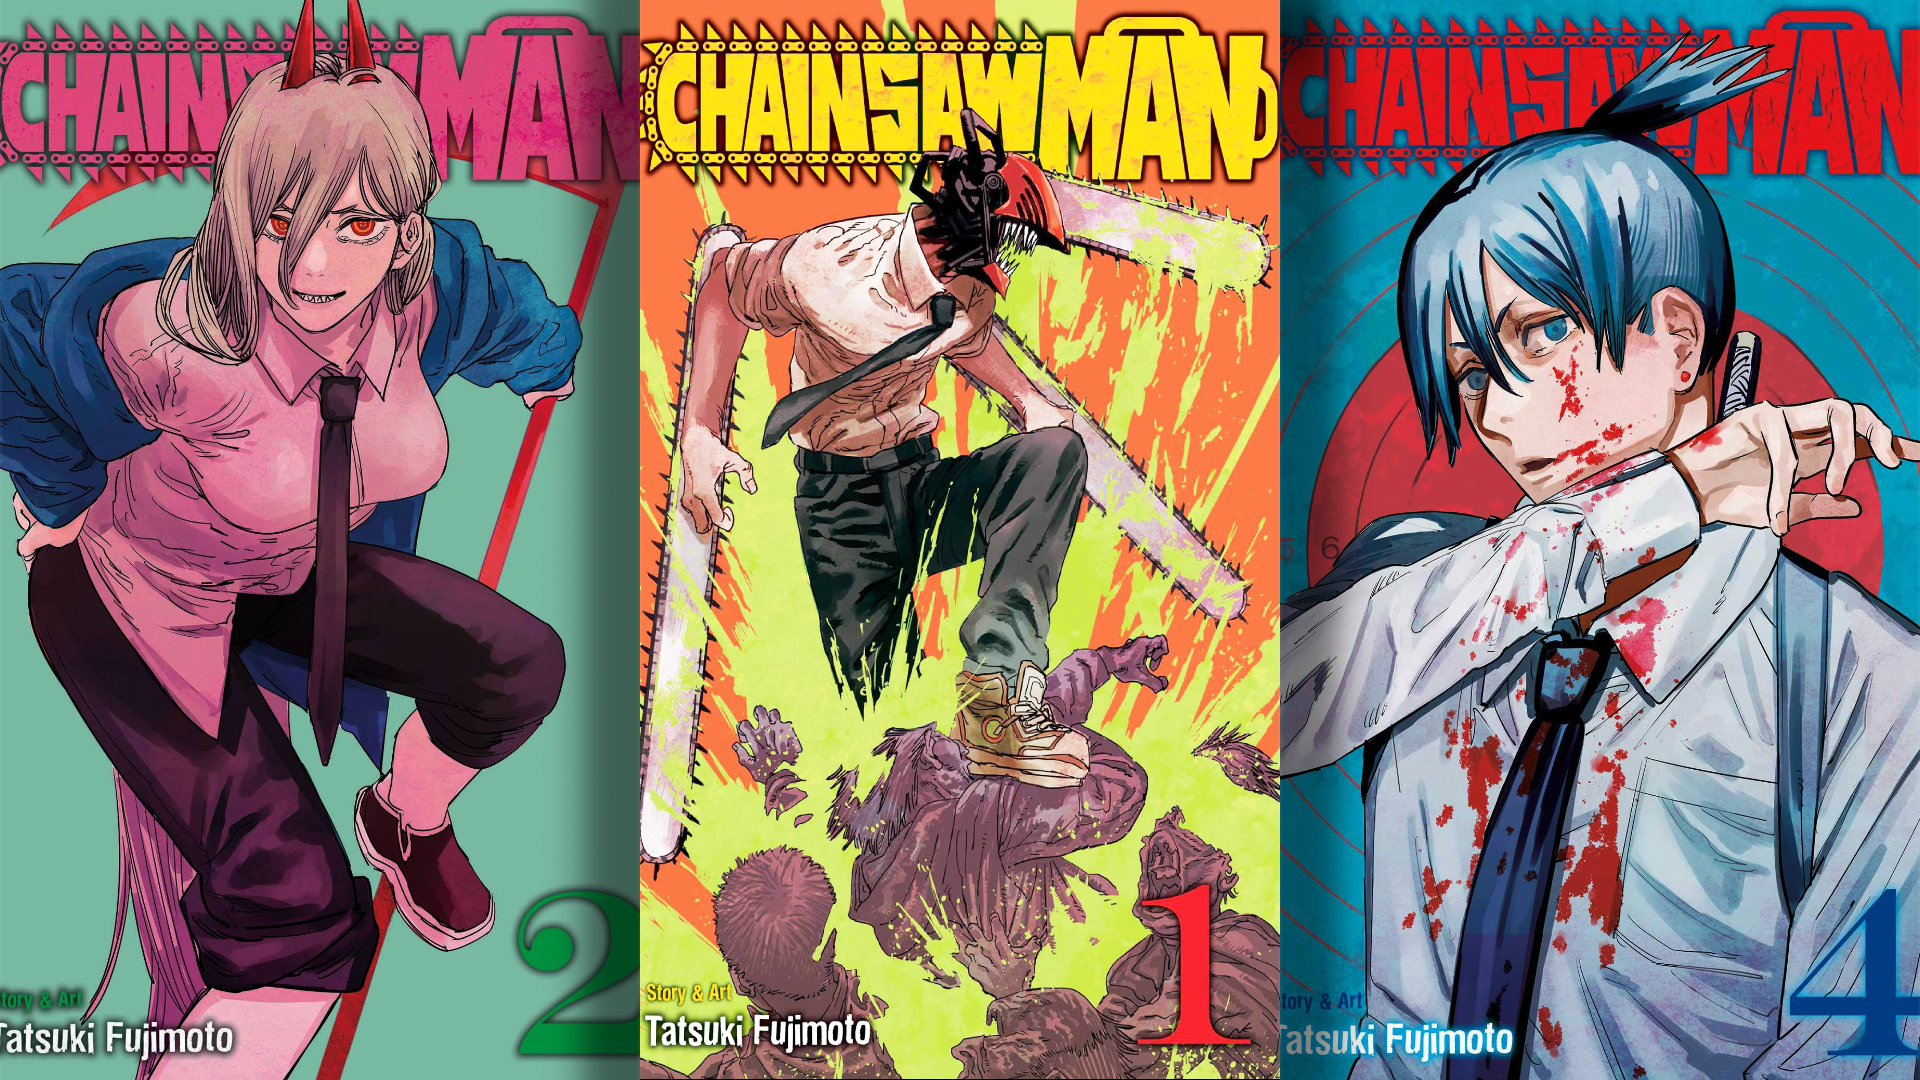 Chainsaw Man Vol.2 Manga Comic Book Shounen Jump Anime Tatsuki Fujimoto  Japan